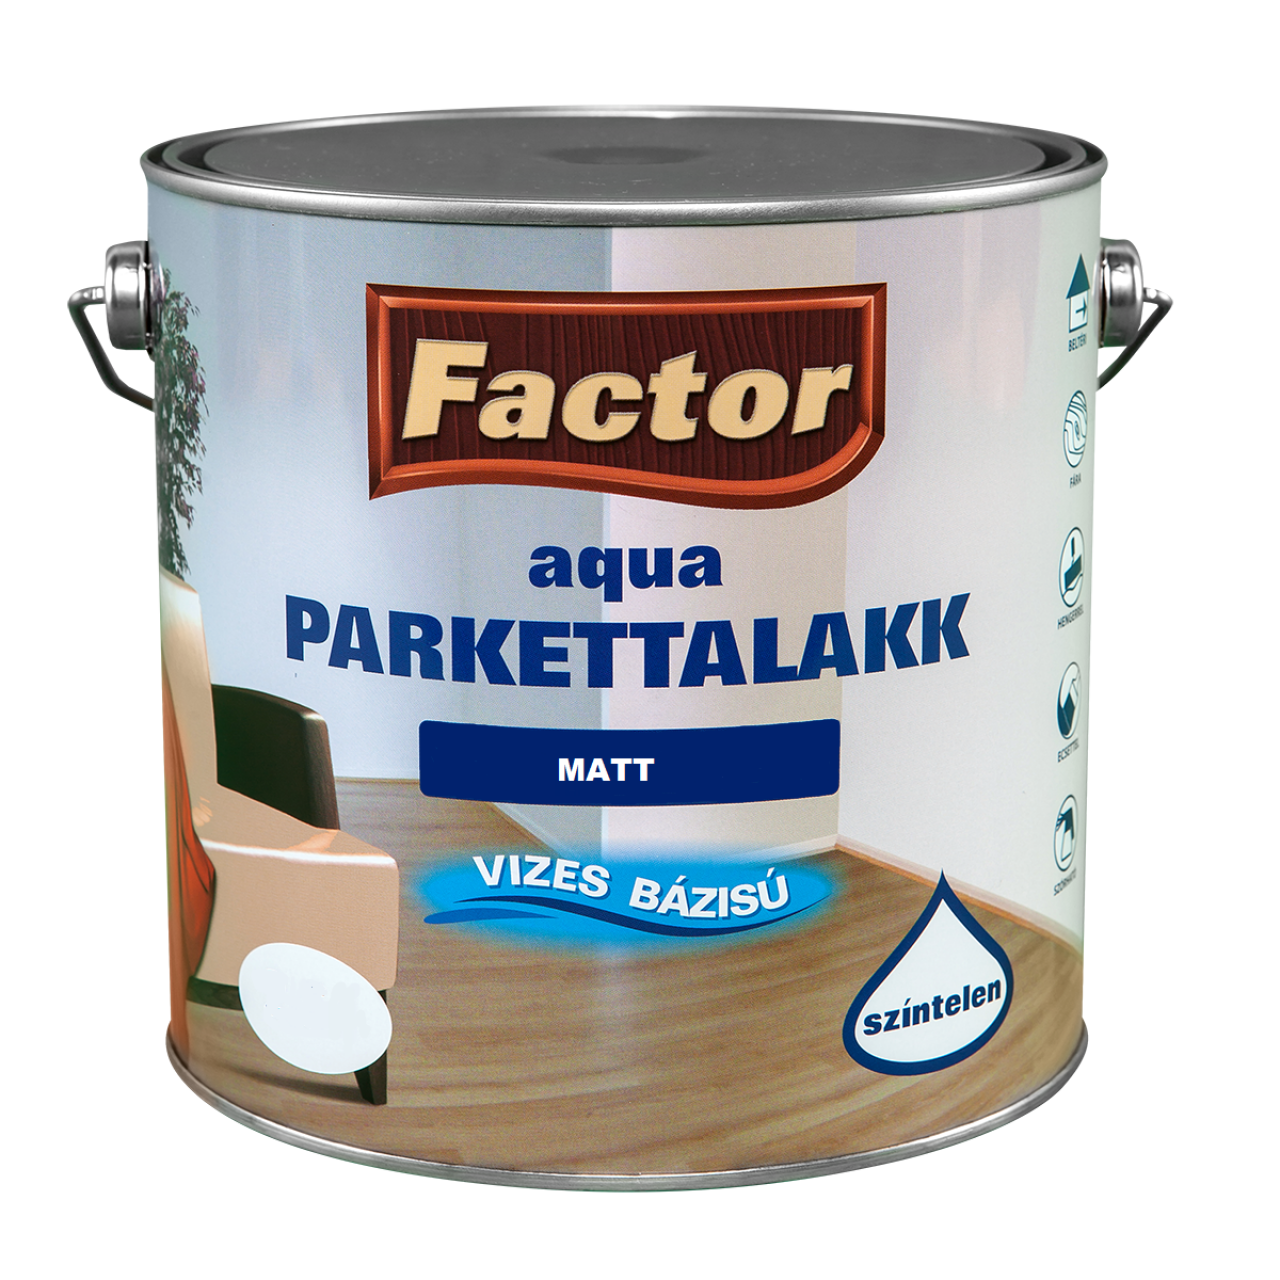 Factor Aqua Parkettalakk matt 075L CH1 (115771)